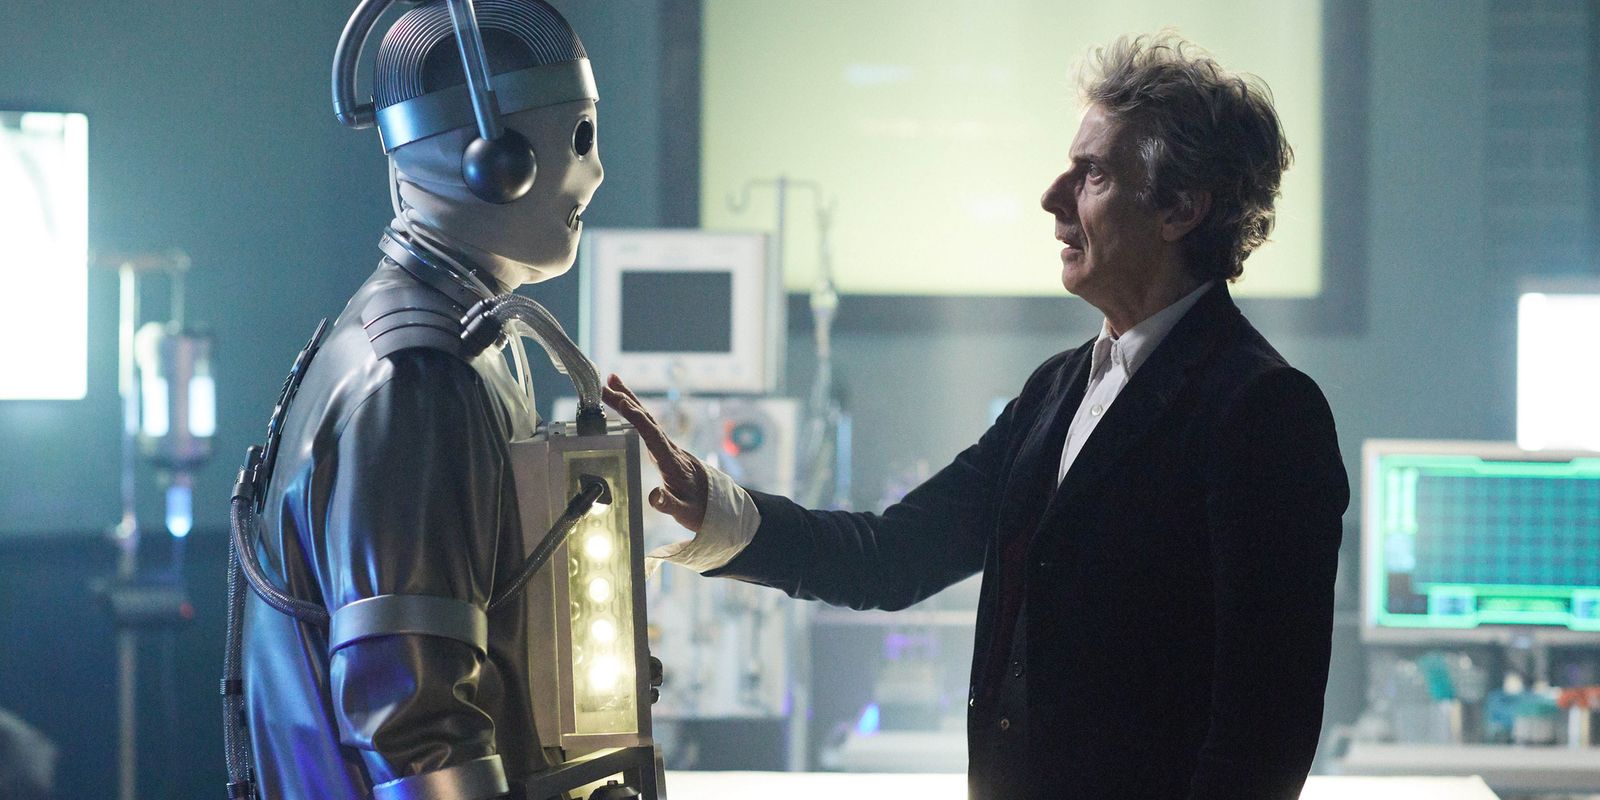 Peter Capaldi in Doctor Who Season 10 Episode 11